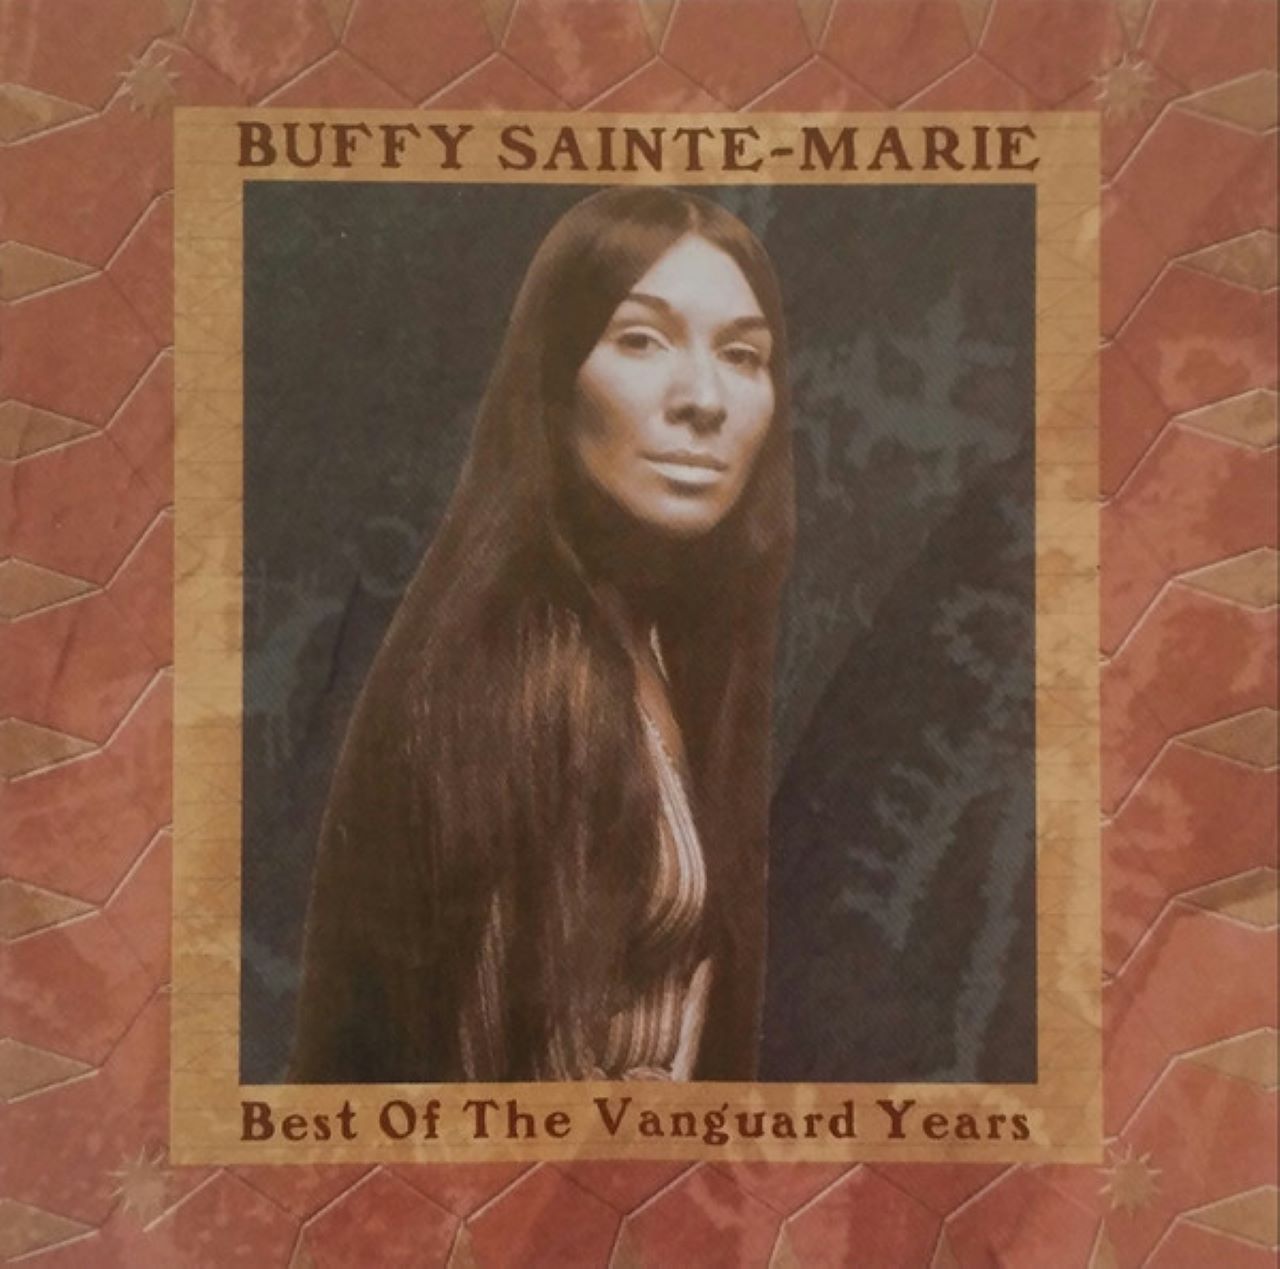 Buffy Sainte-Marie - Best Of The Vanguard Years cover album